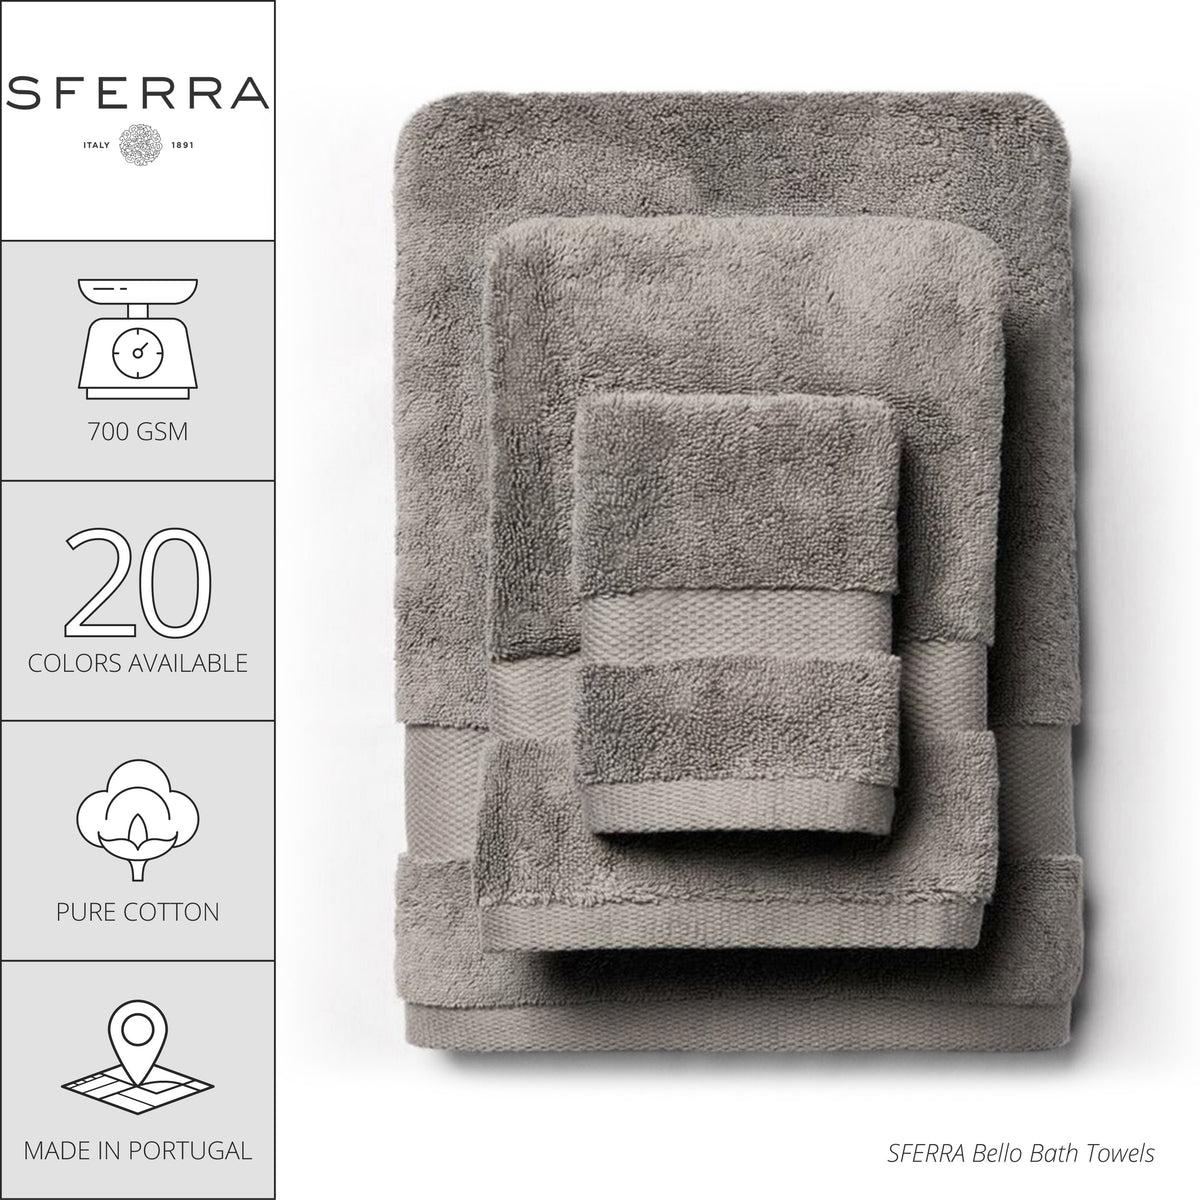 Sferra Bello Bath Towels and Mats - Ivory